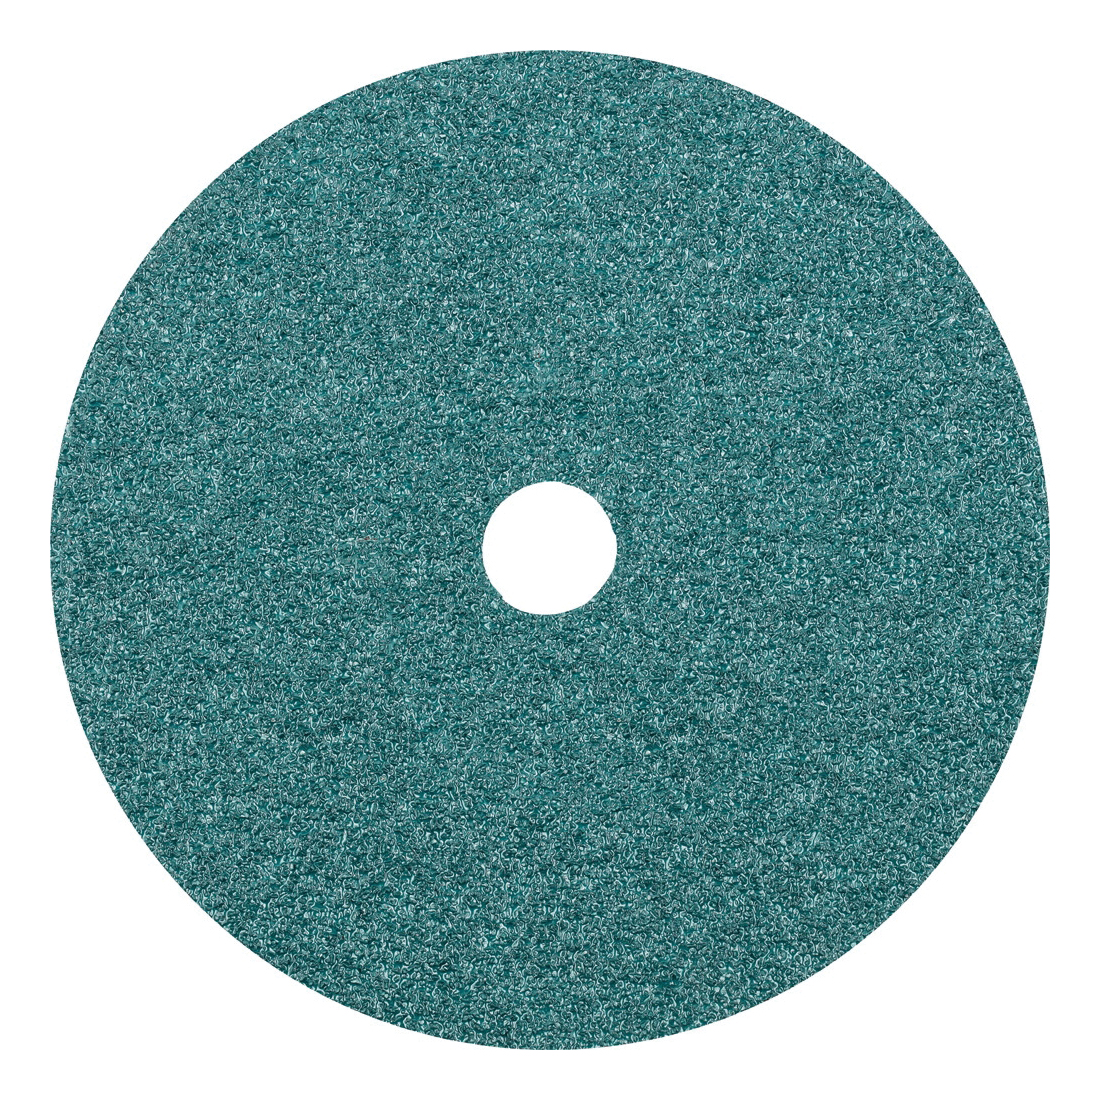 PFERD 62712 Standard Coated Abrasive Disc, 7 in Dia, 7/8 in Center Hole, 24 Grit, Zirconia Alumina Abrasive, Arbor Attachment